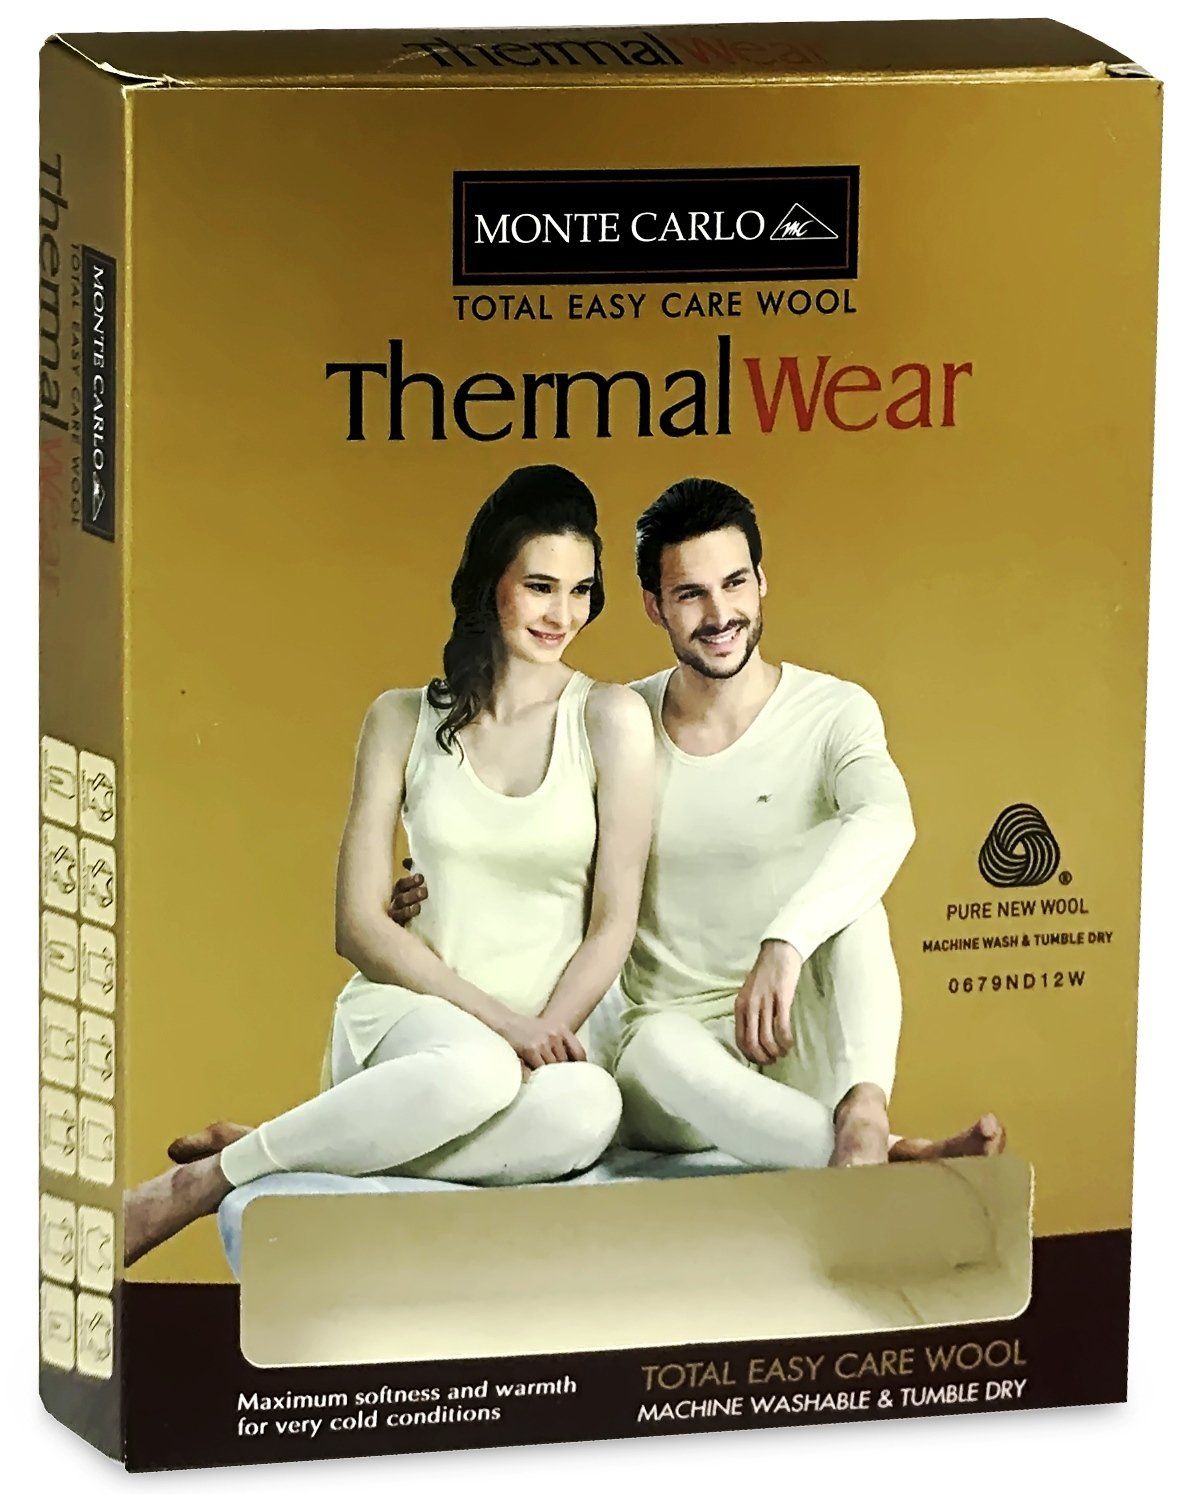 Monte Carlo Pure New Merino Wool Machine Washable Thermal for Men